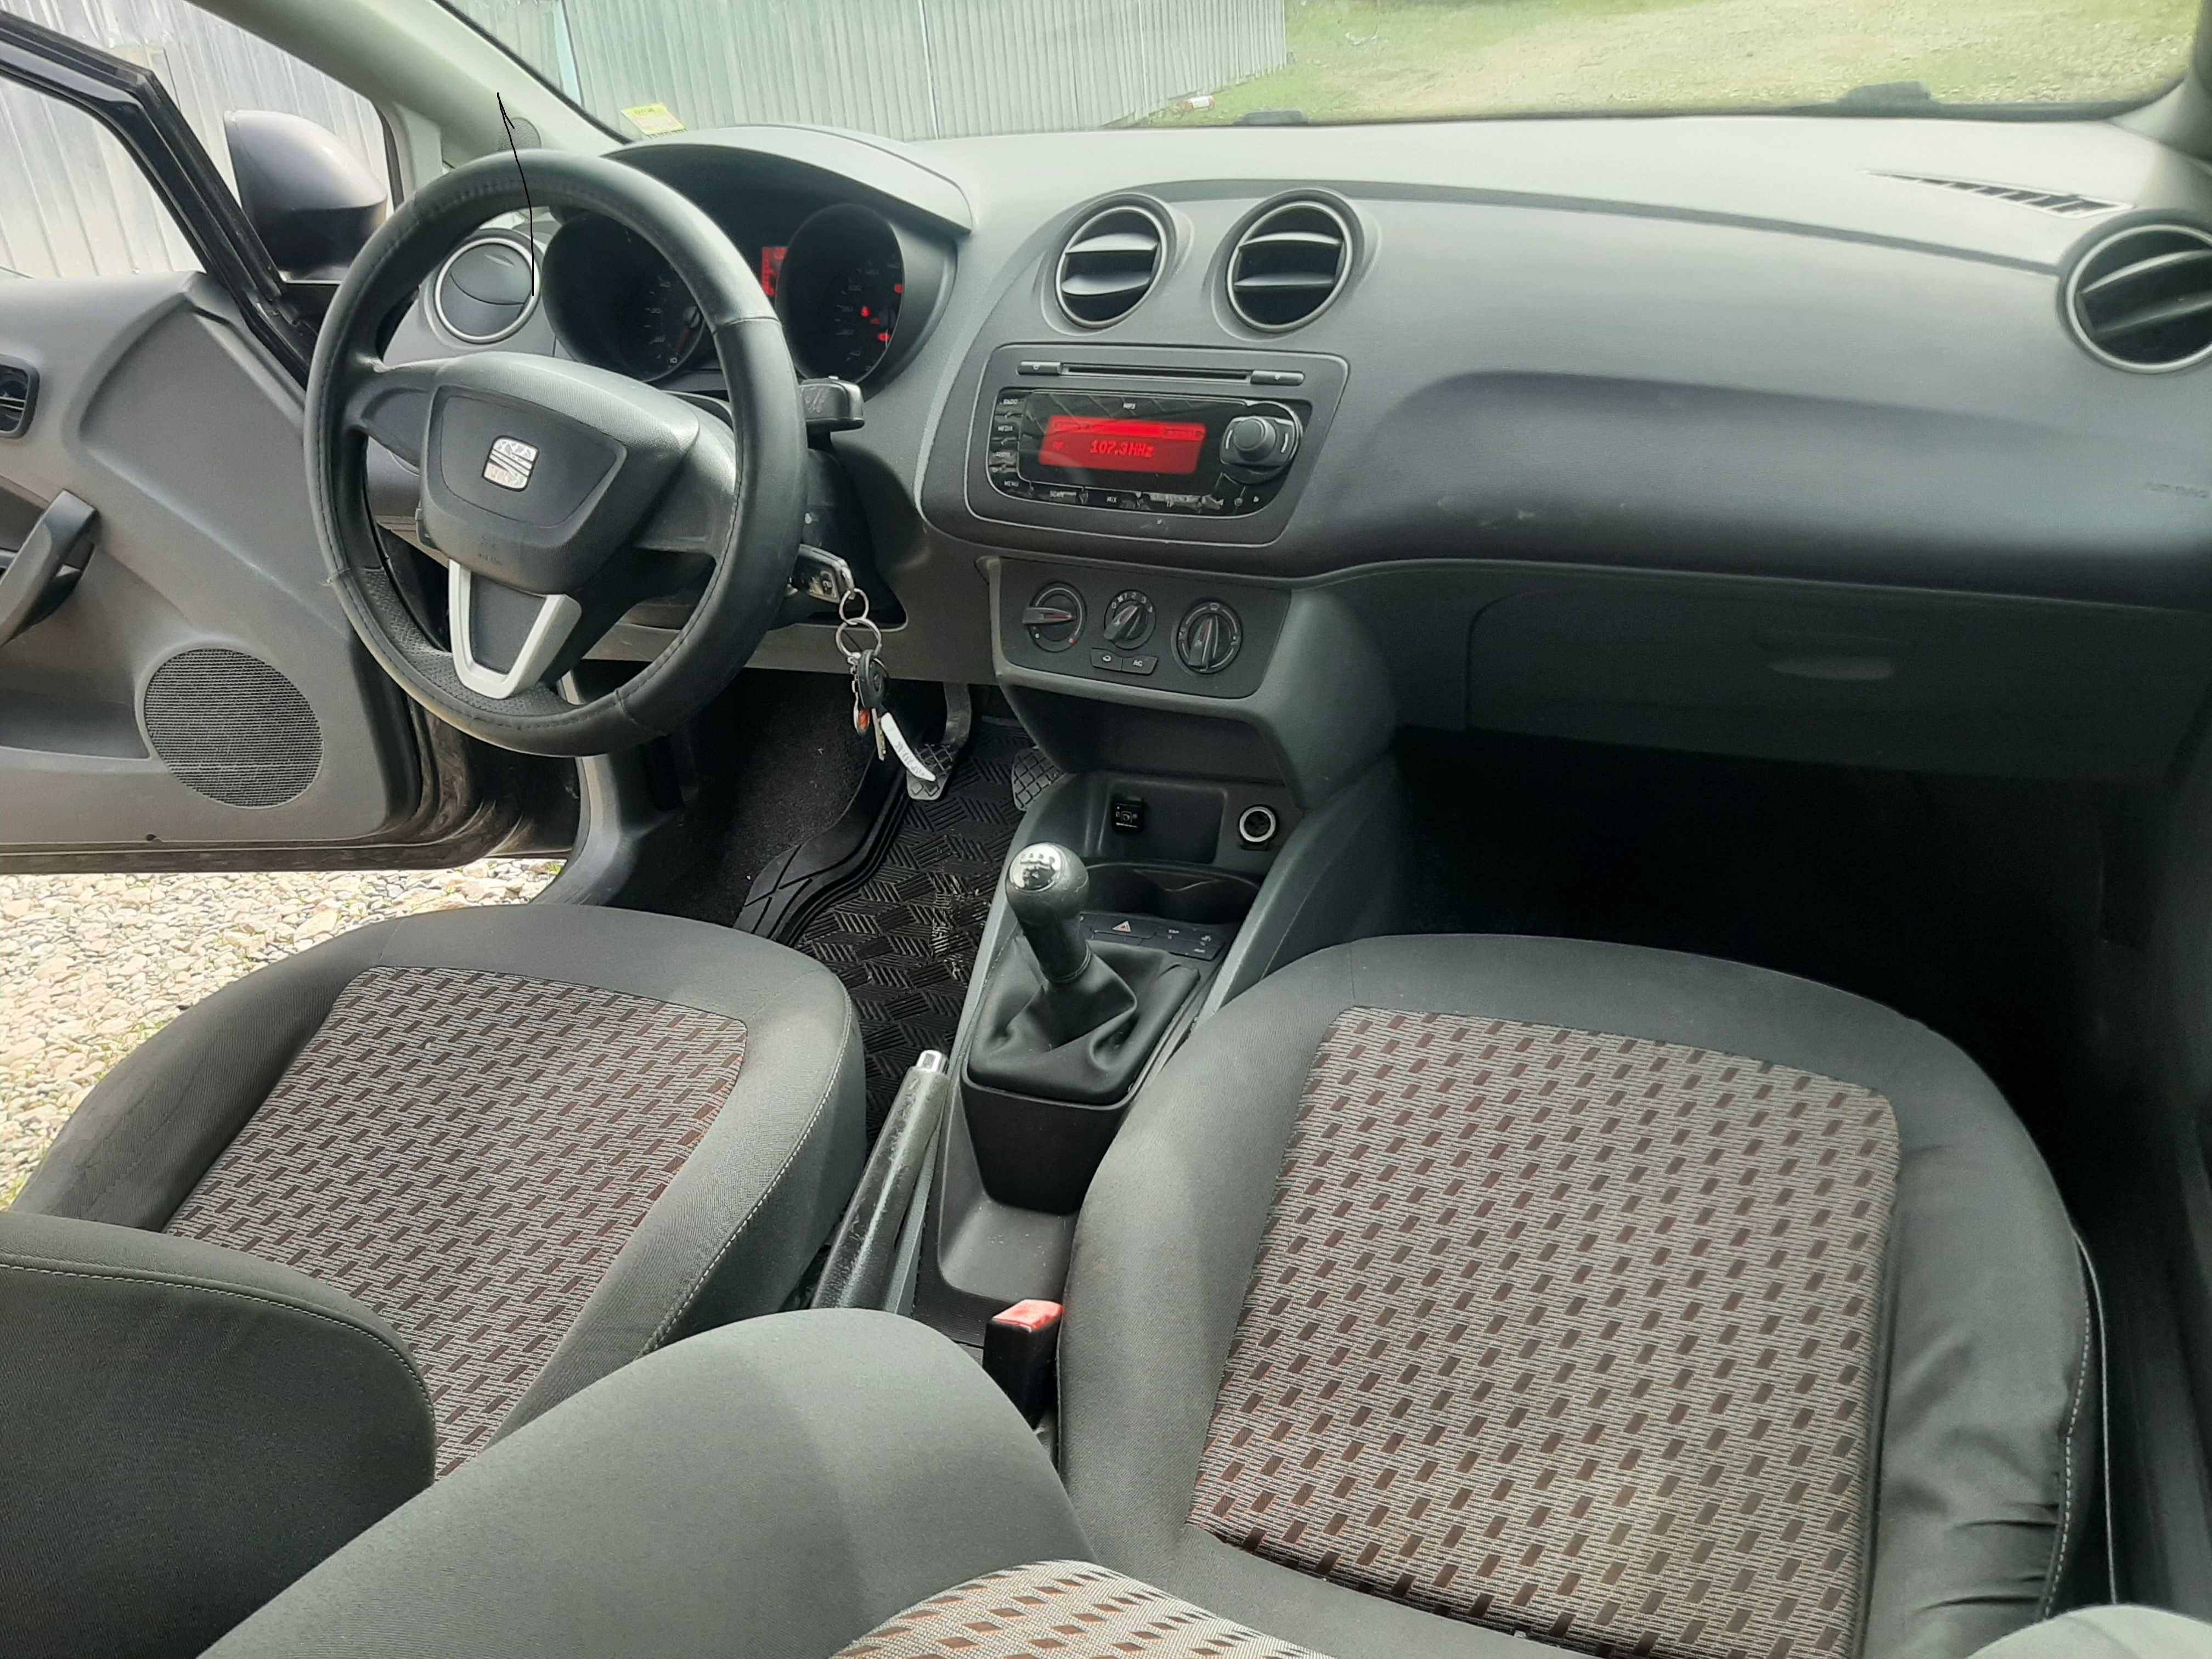 SEAT Ibiza 6J, 70 CP, motor 1.2, benzina